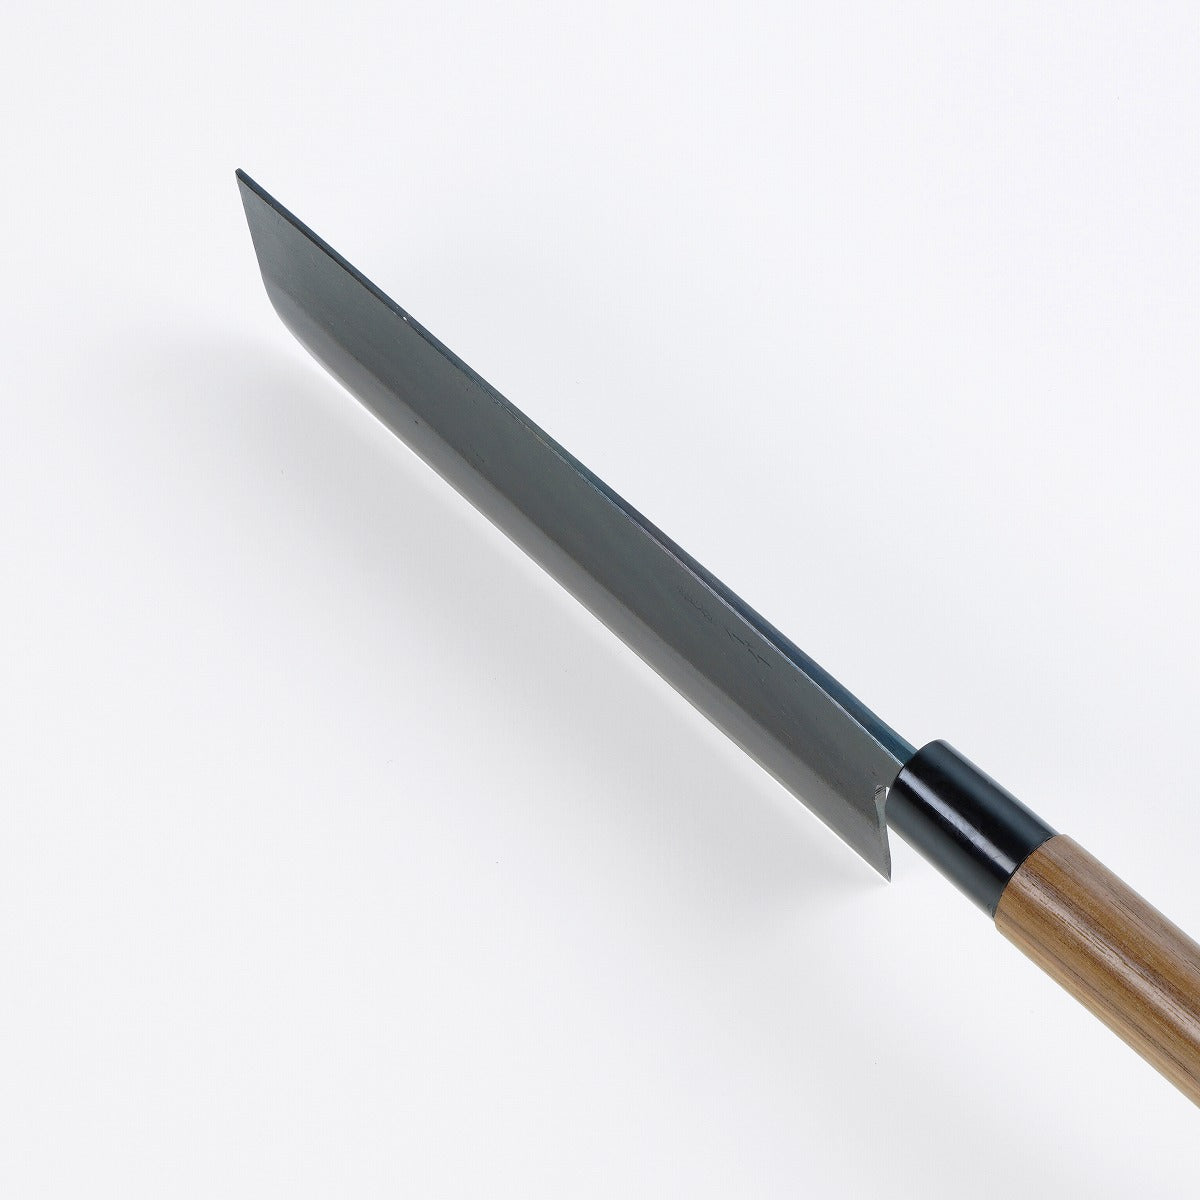 HONMAMON "MOTOKANE" Nakiri Kurouchi (Vegetable Knife) Aogami Super Steel, 165mm